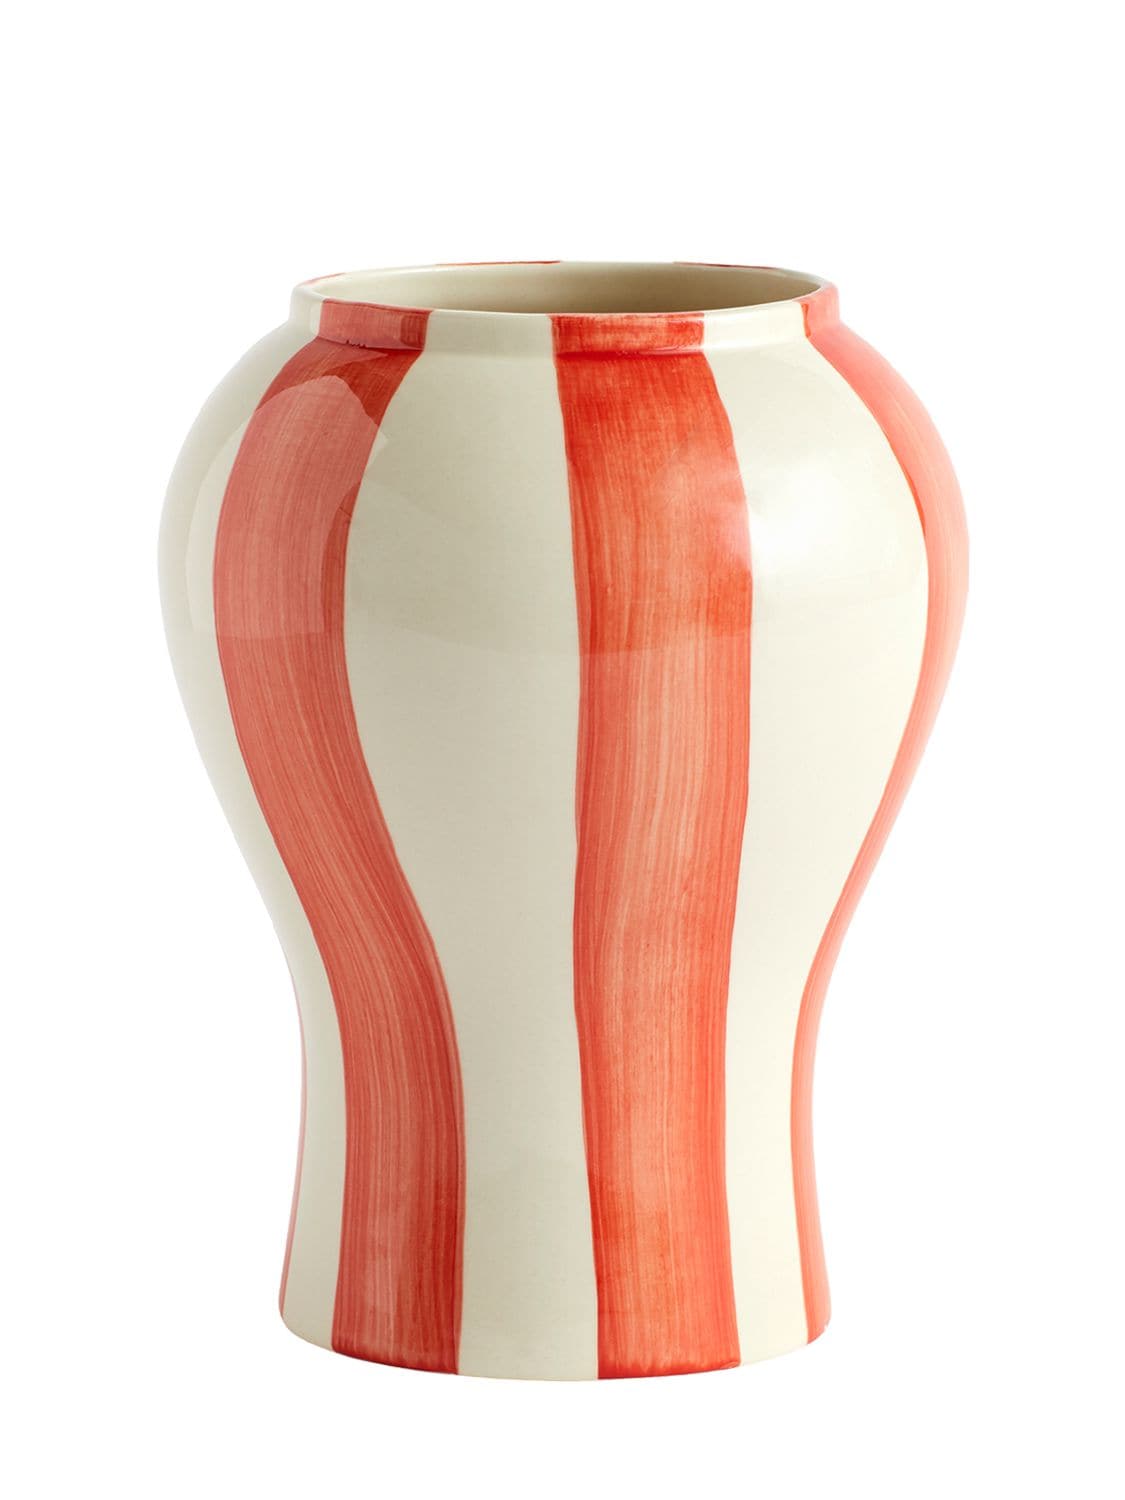 Hay Sobremesa Small Red Striped Vase